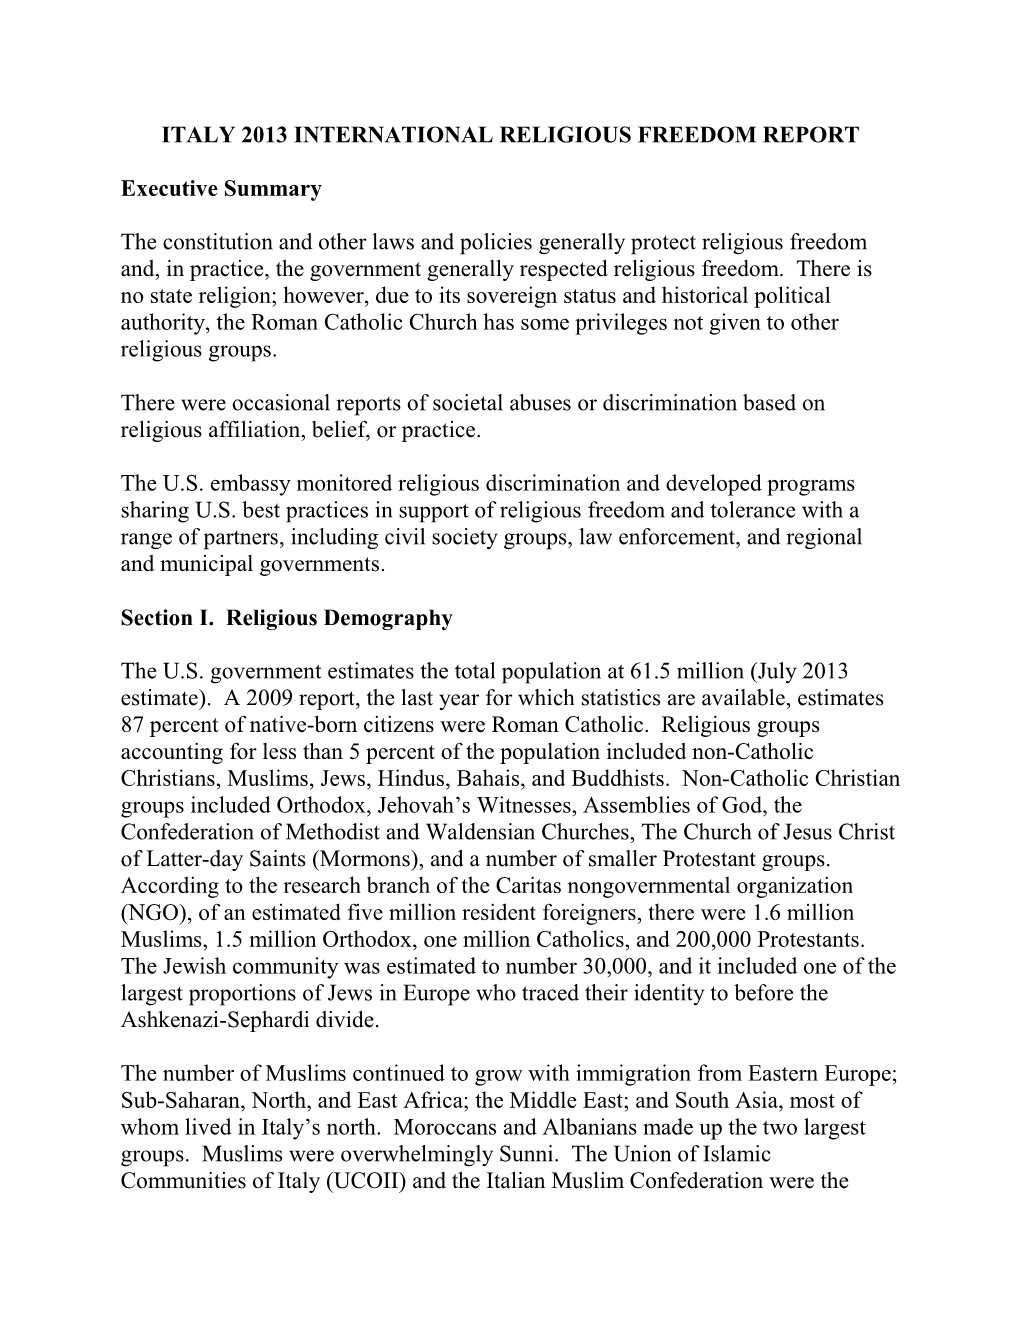 Italy 2013 International Religious Freedom Report